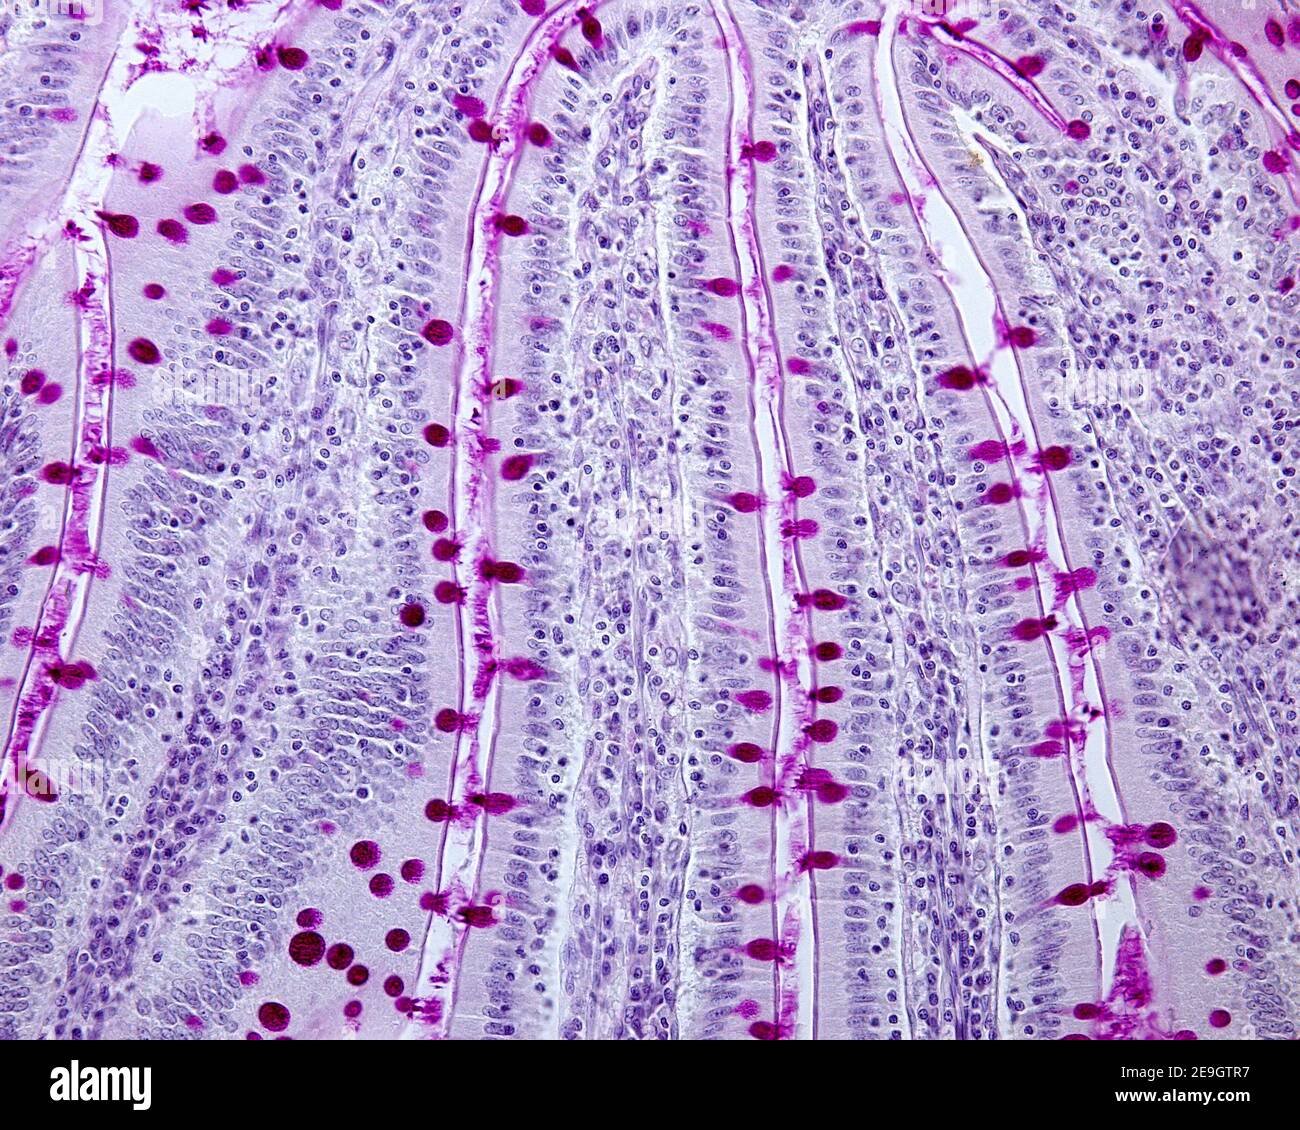 Hämatoxylin eosin färbung -Fotos und -Bildmaterial in hoher Auflösung –  Alamy